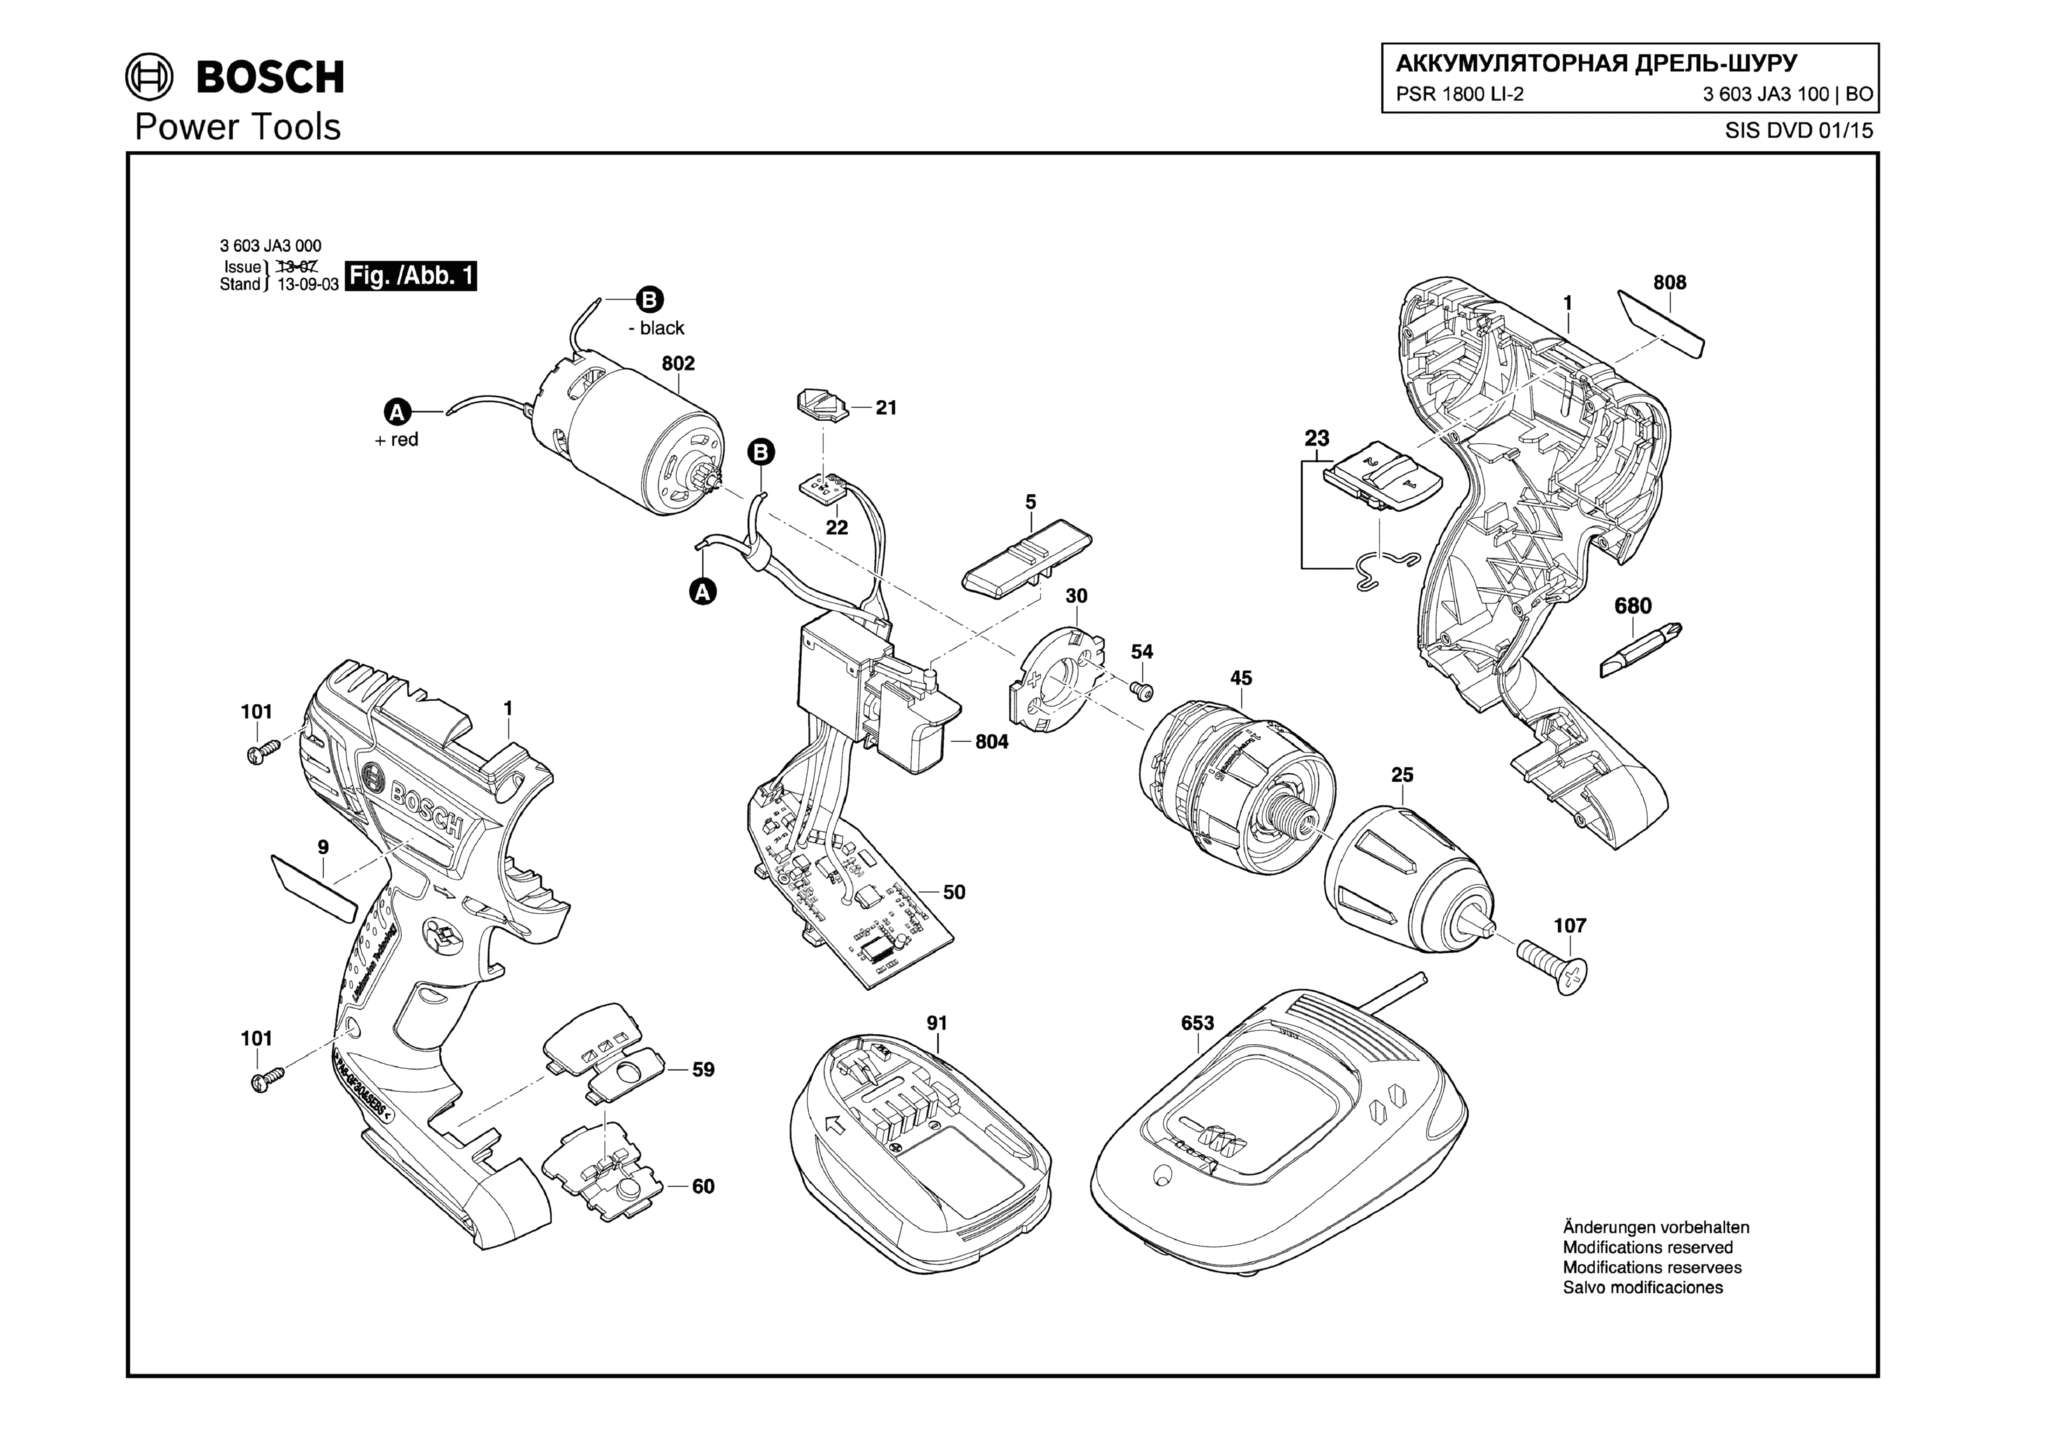 Запчасти, схема и деталировка Bosch PSR 1800 LI-2 (ТИП 3603JA3100)